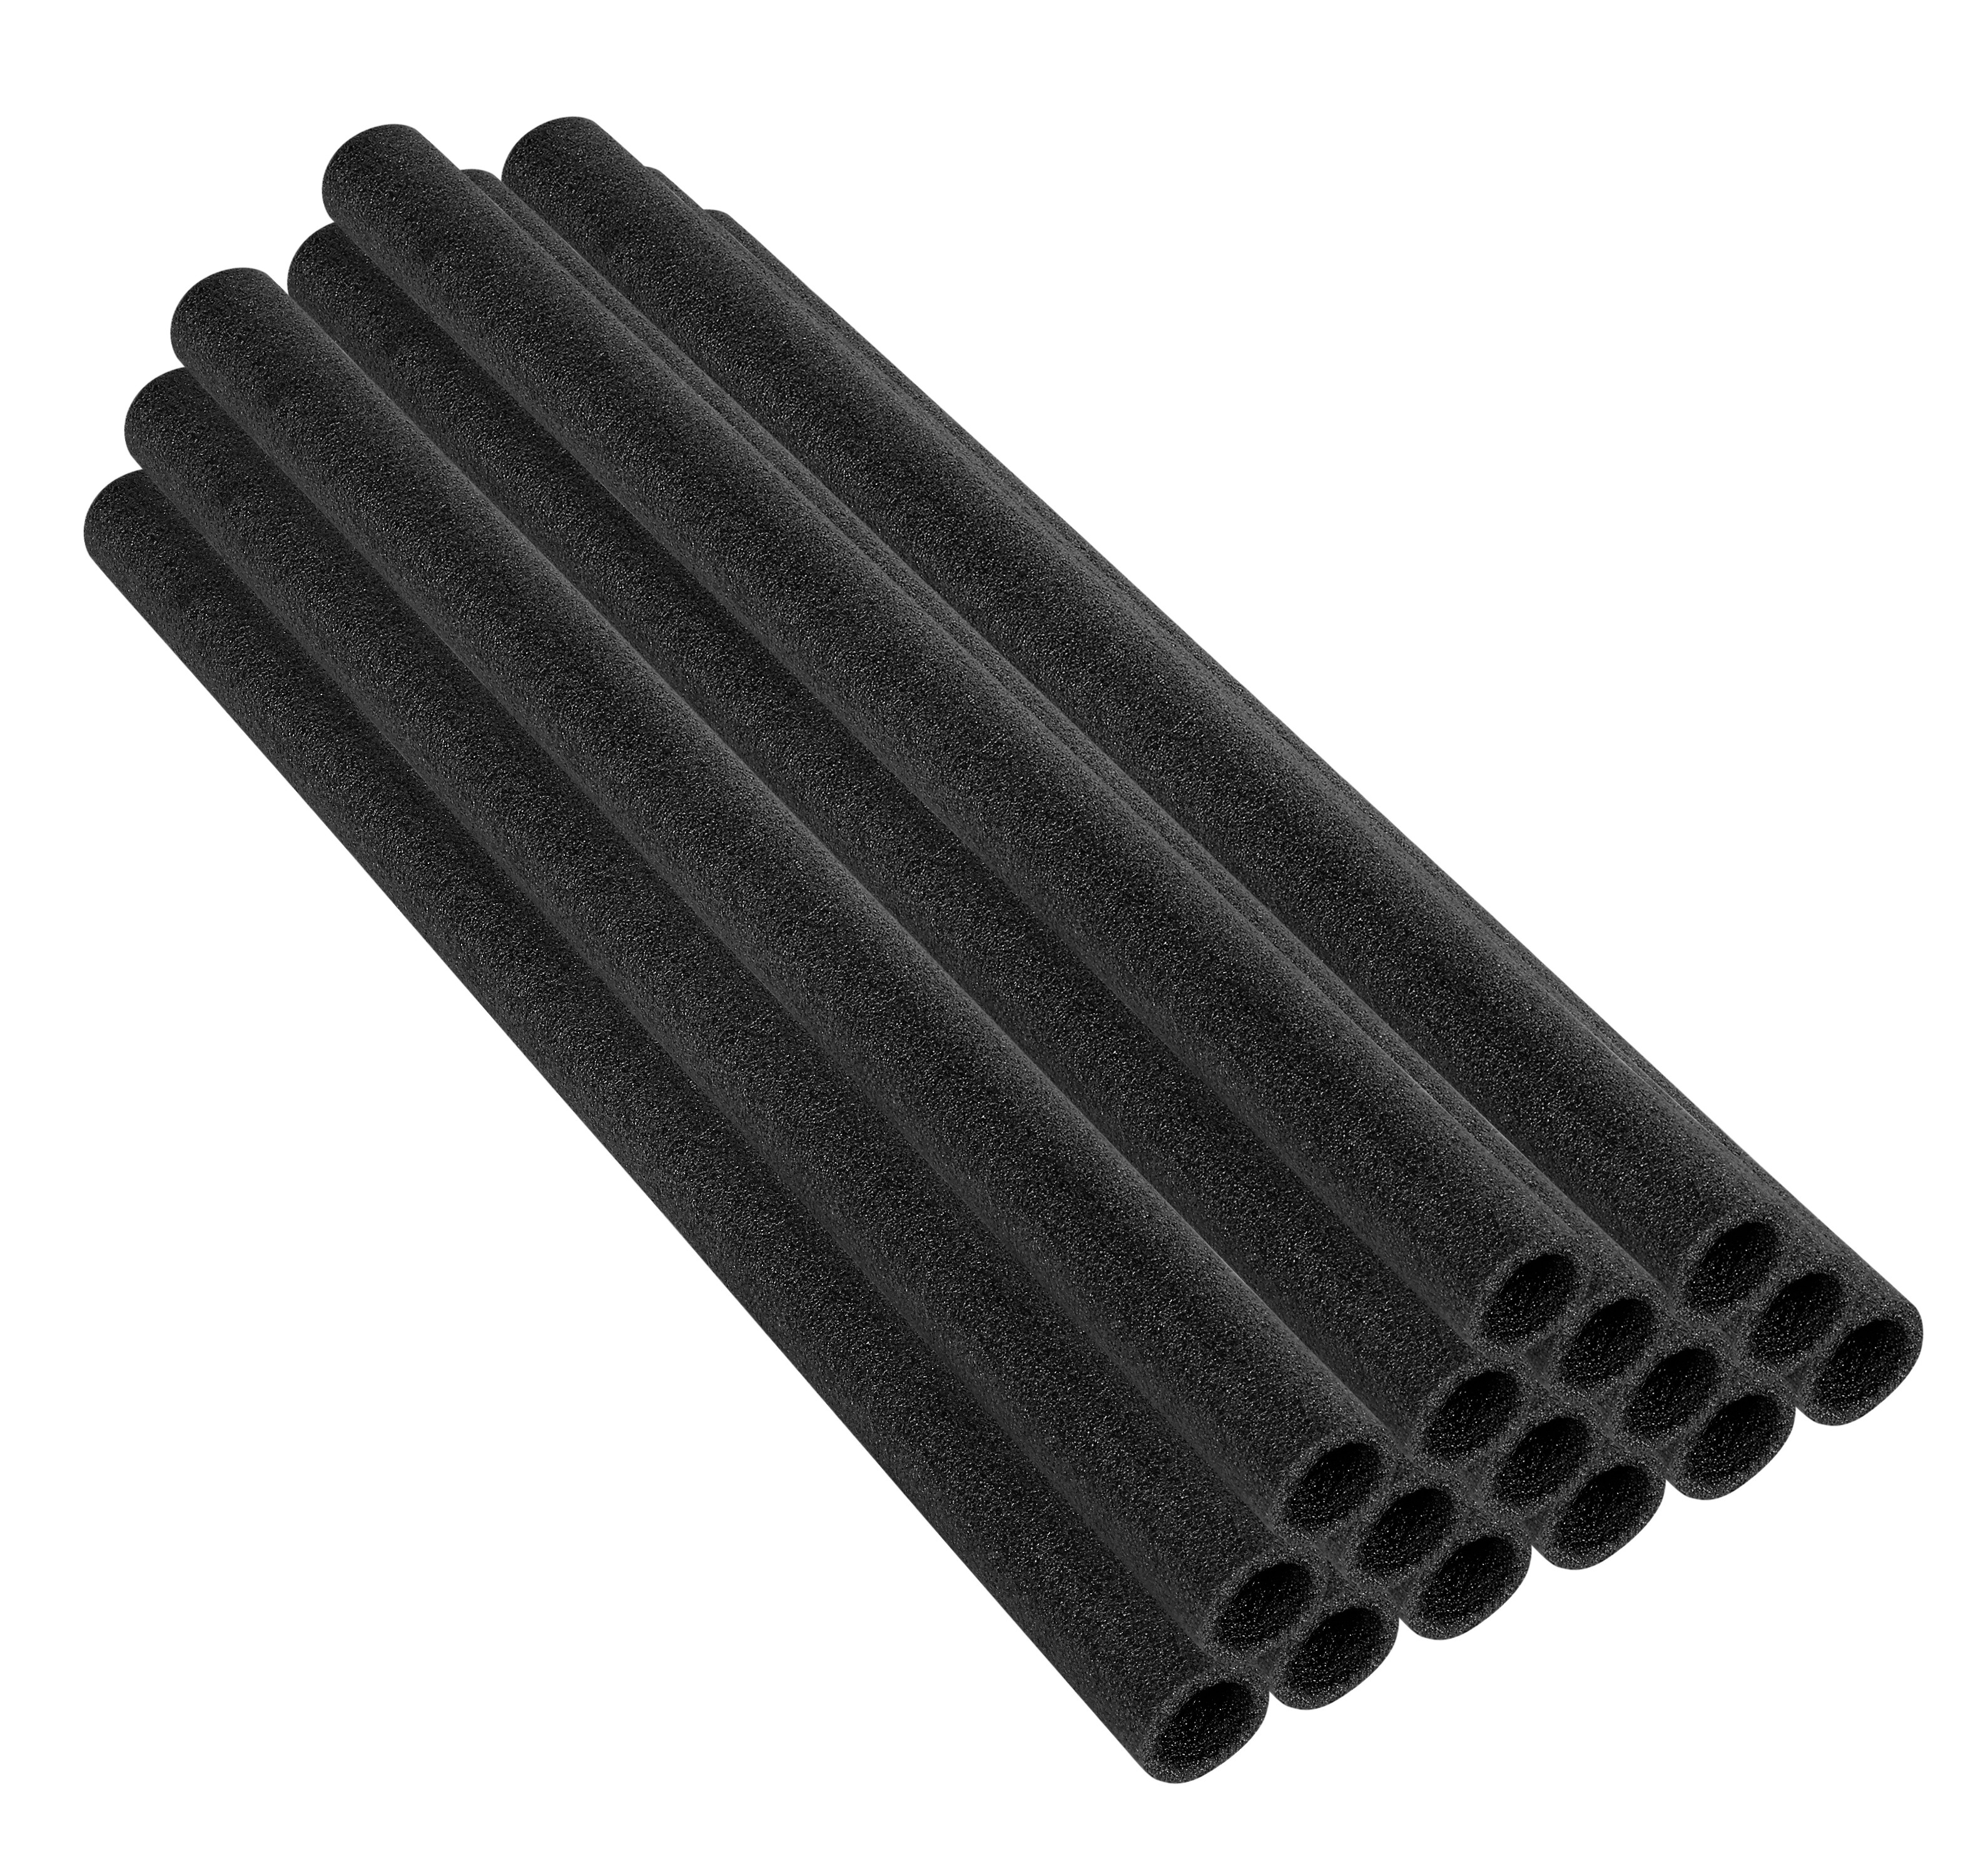 33 Inch Trampoline Pole Foam Sleeves, fits for 1.5" Diameter Pole - Set of 16 - Black